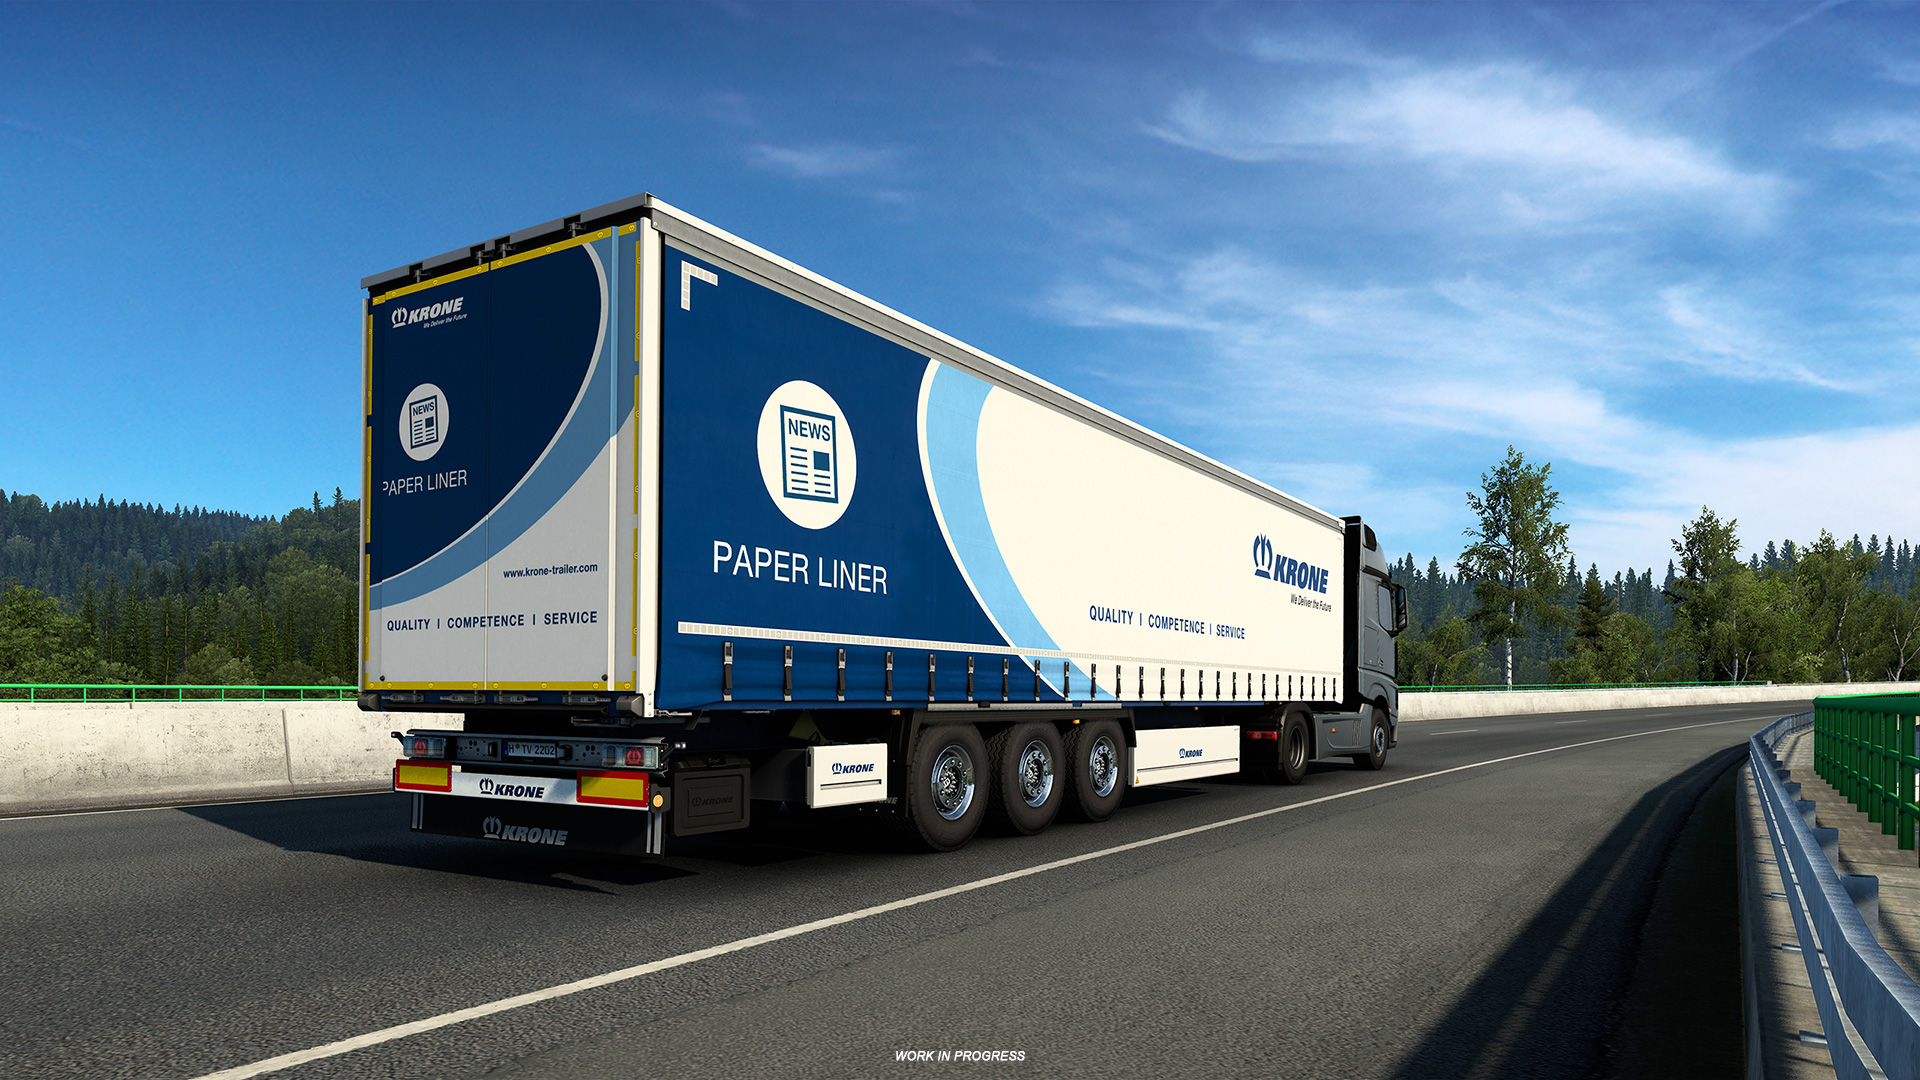 Euro Truck Simulator 2 Krone Trailer Pack Free Download